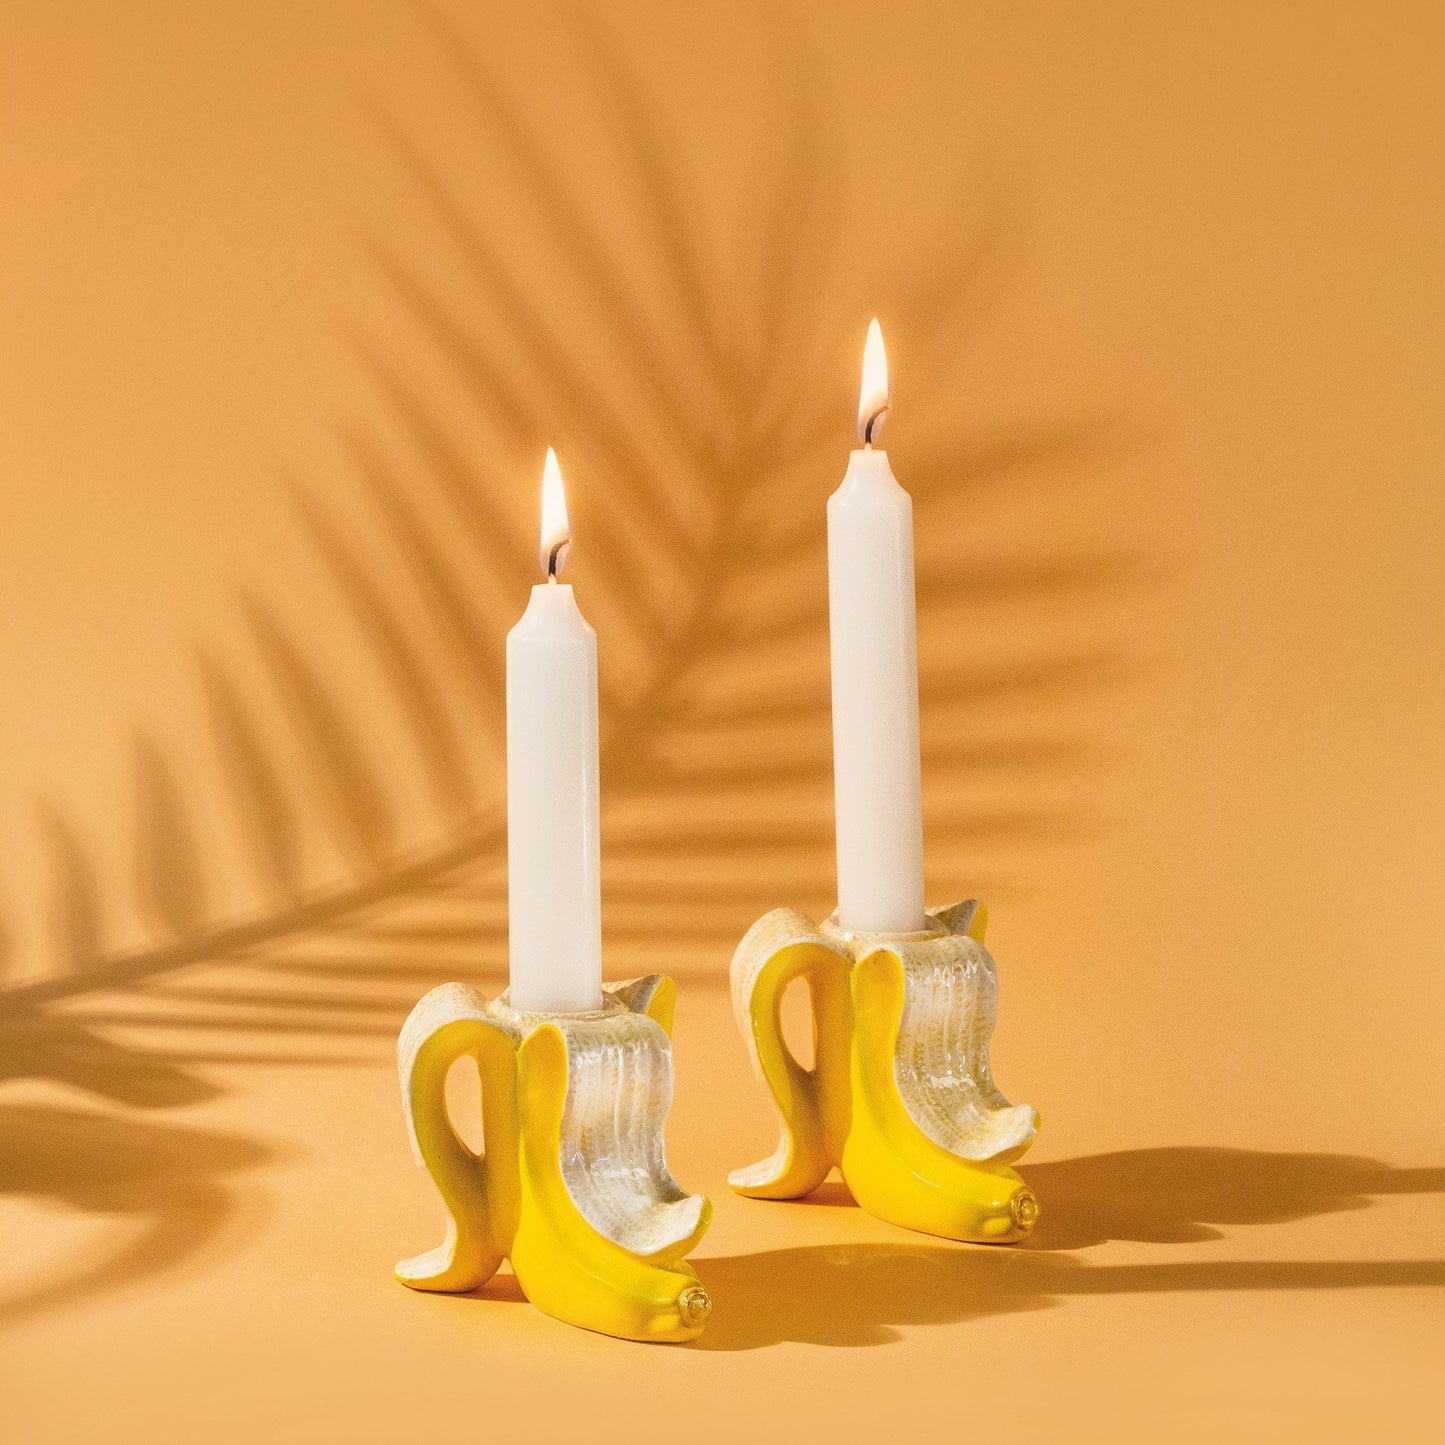 Bougeoir Banana Romance Donkey | Boutique d'objets cadeaux designs CoolDesign.fr